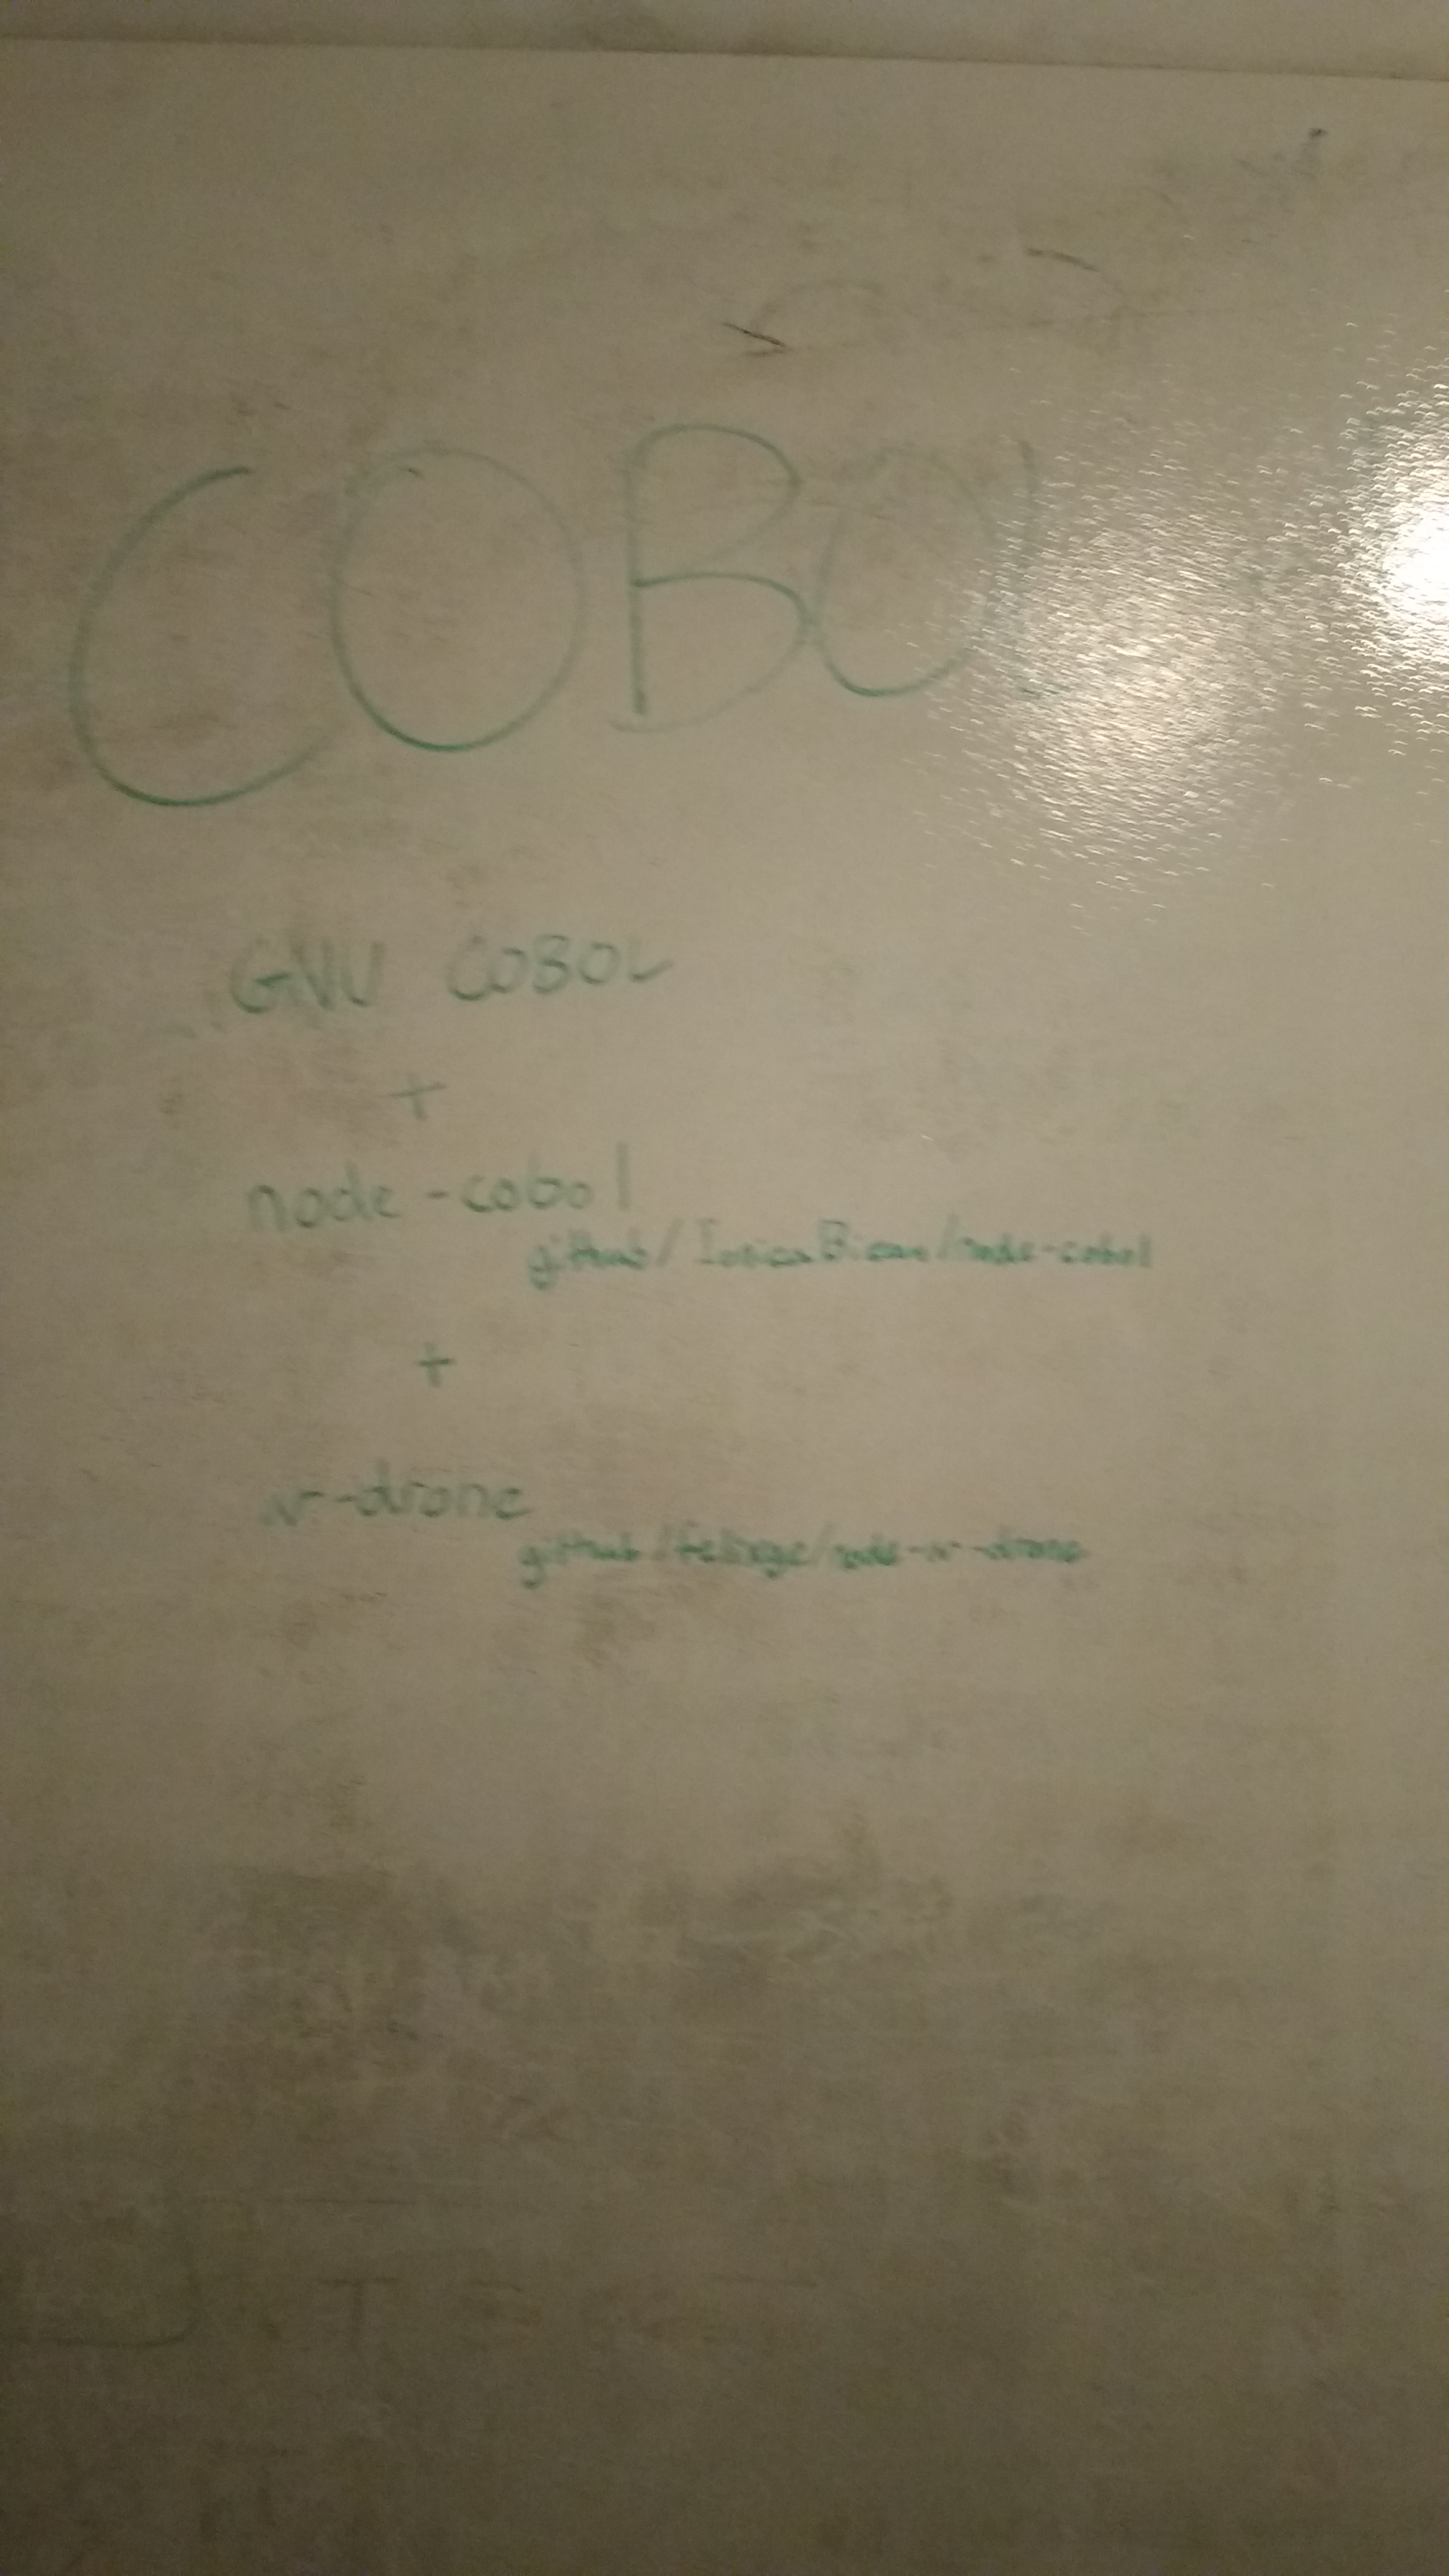 GNU COBOL, node-cobol and m-drone. Also, github URLs